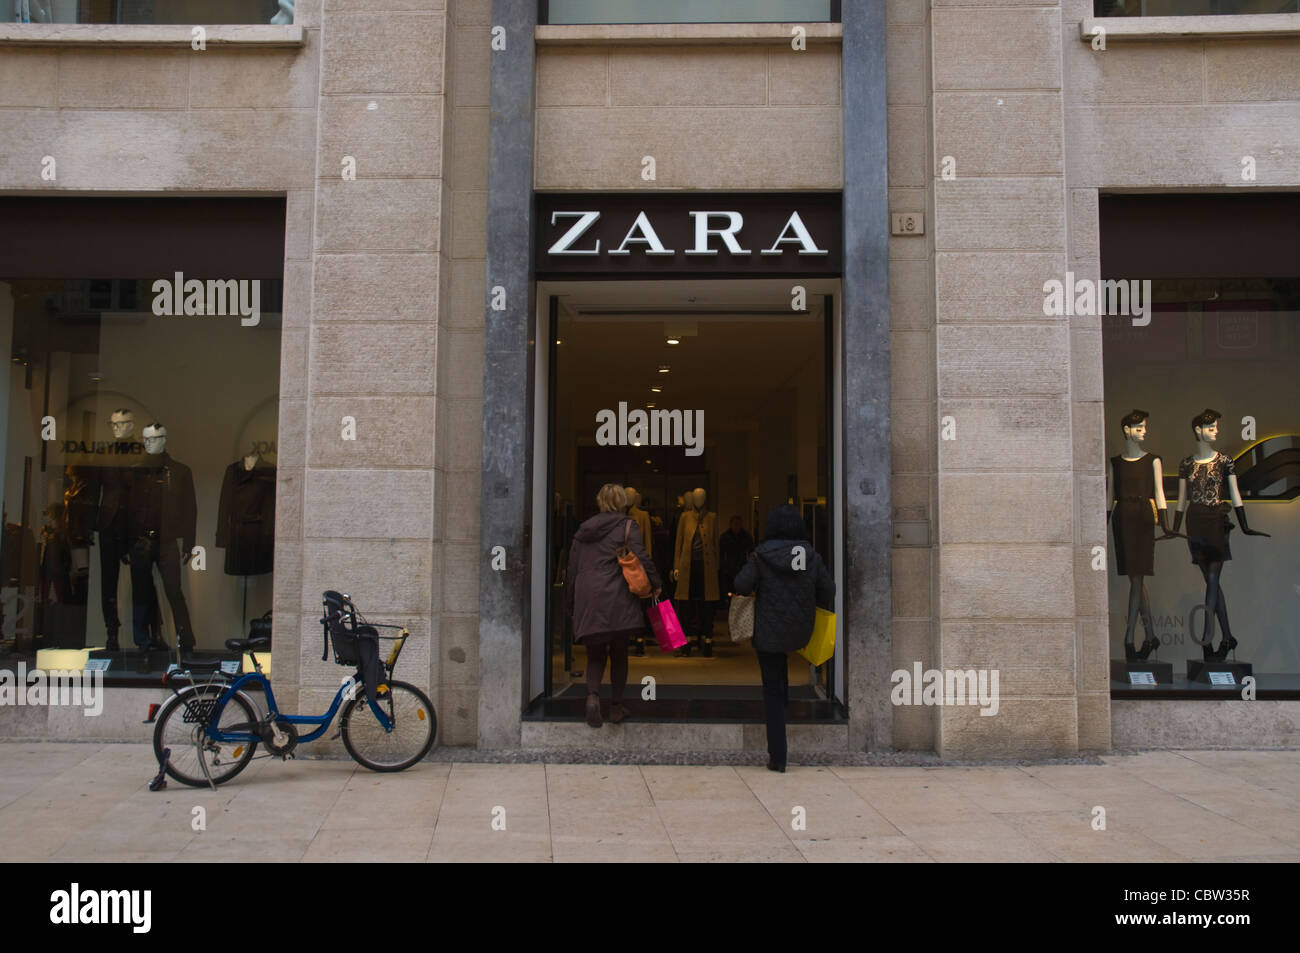 Zara shopfront hi-res stock photography and images - Alamy